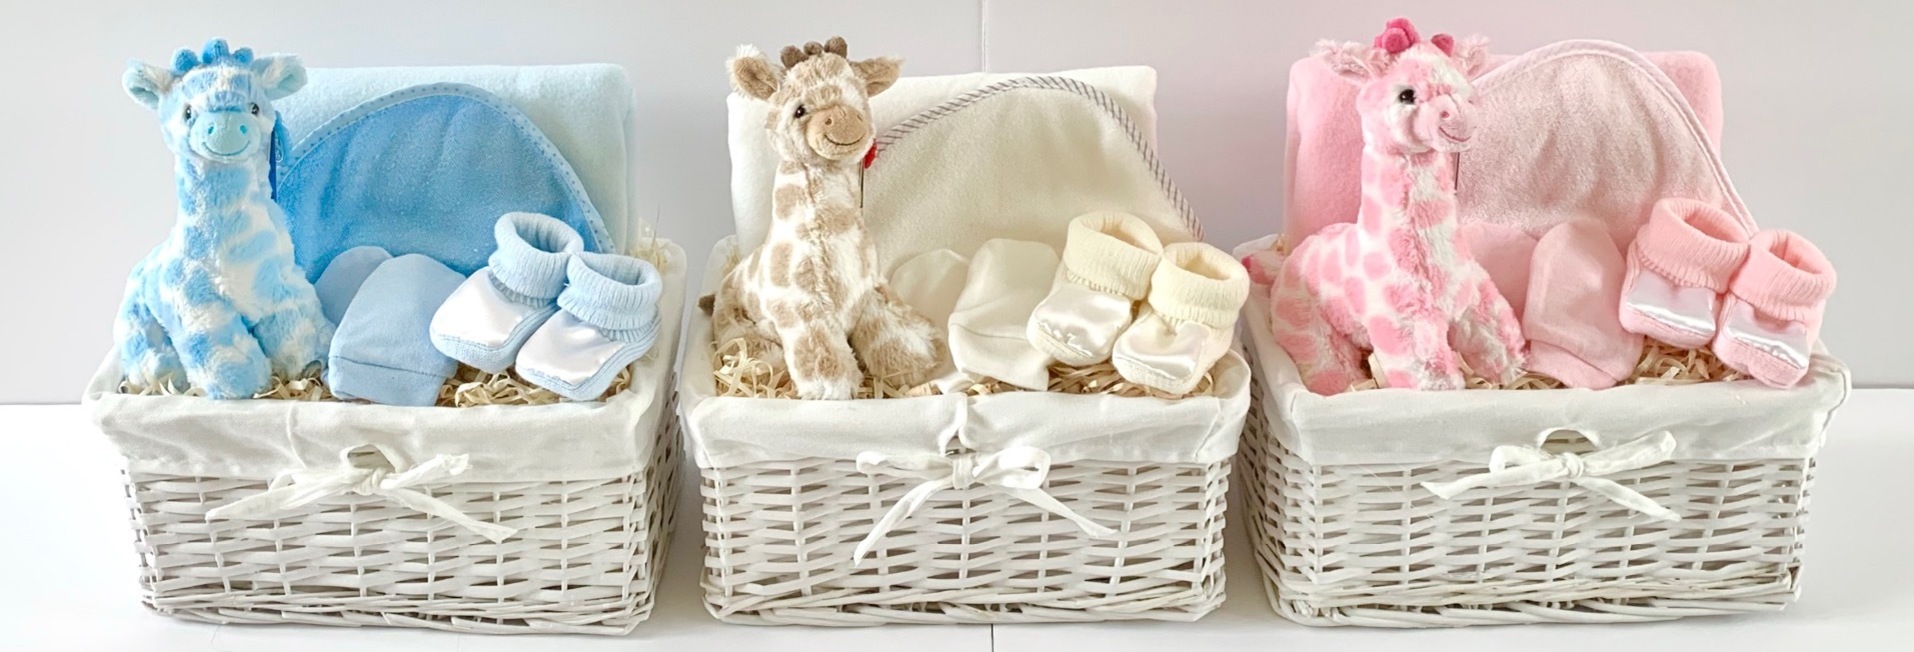 Giraffe Baby Gift Baskets - boy girl neutral